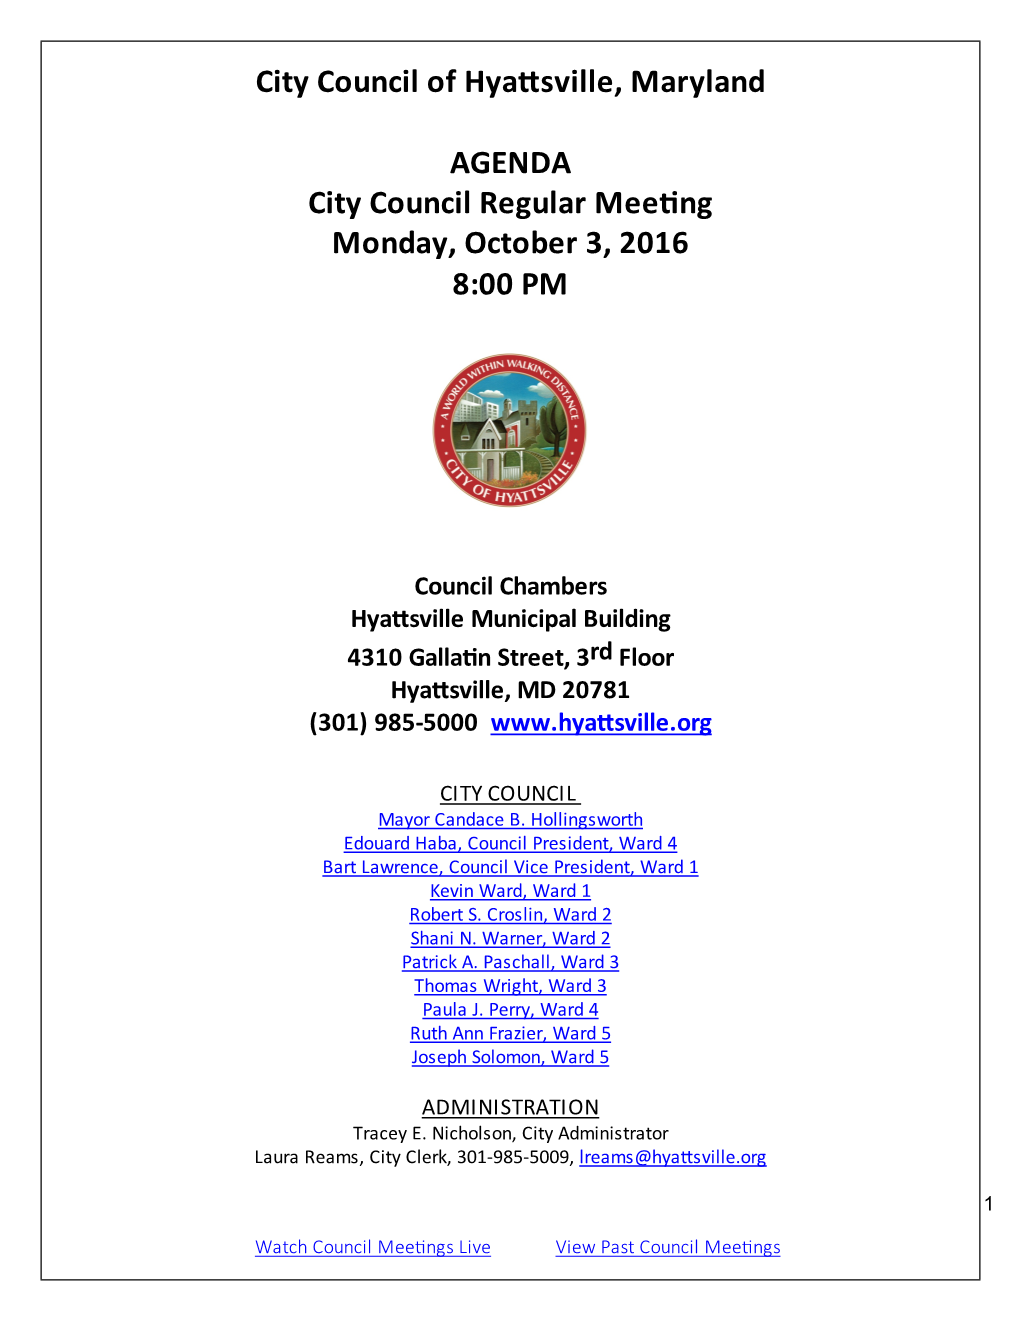 City Council of Hyattsville, Maryland AGENDA City